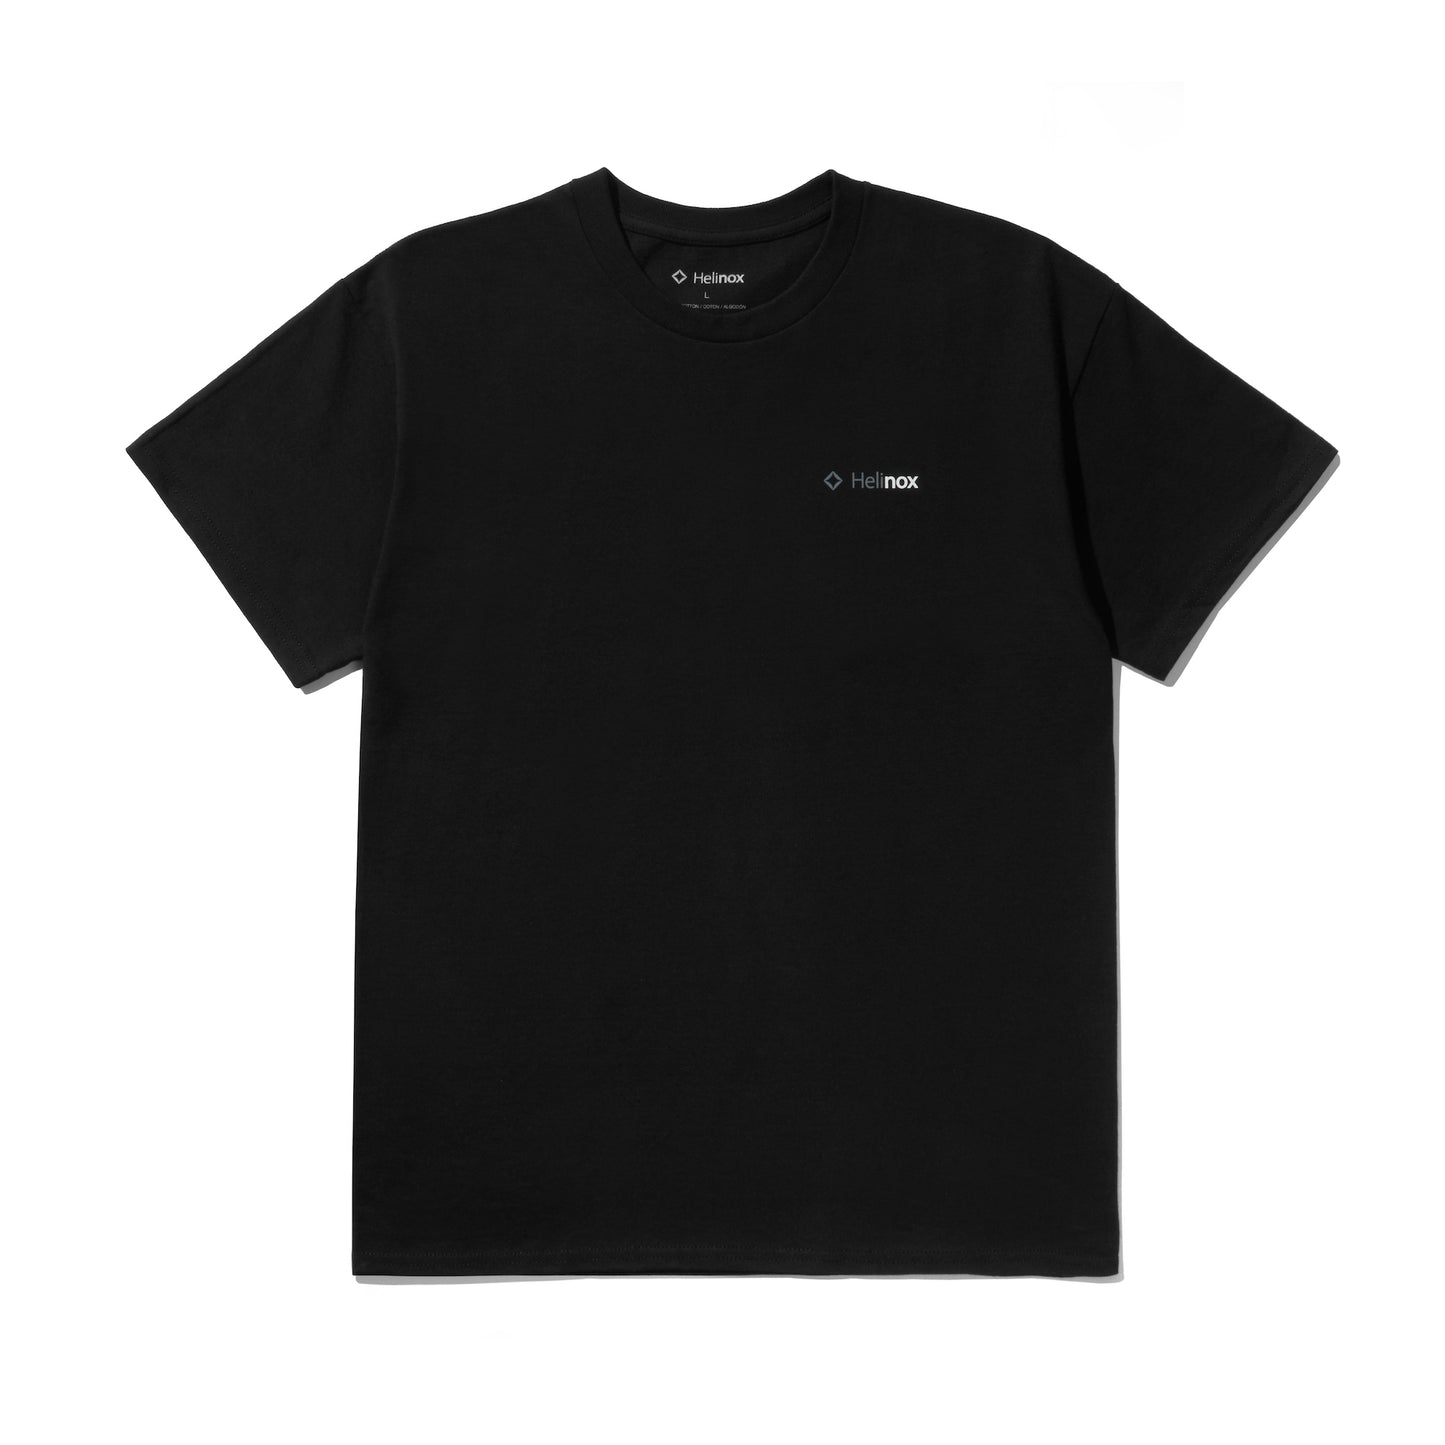 Erick Oh × Helinox Nox T-Shirts [Nox] - Black